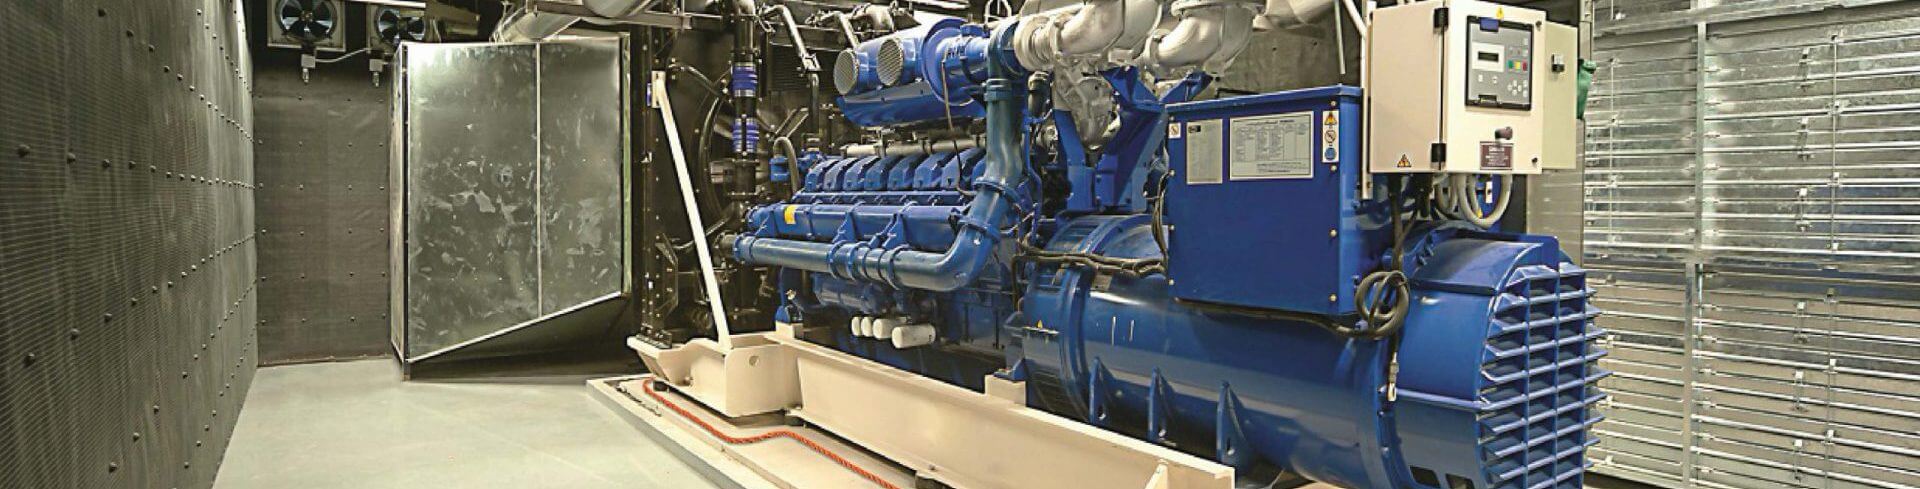 TTK diesel oil leak detection solutions
for generators
